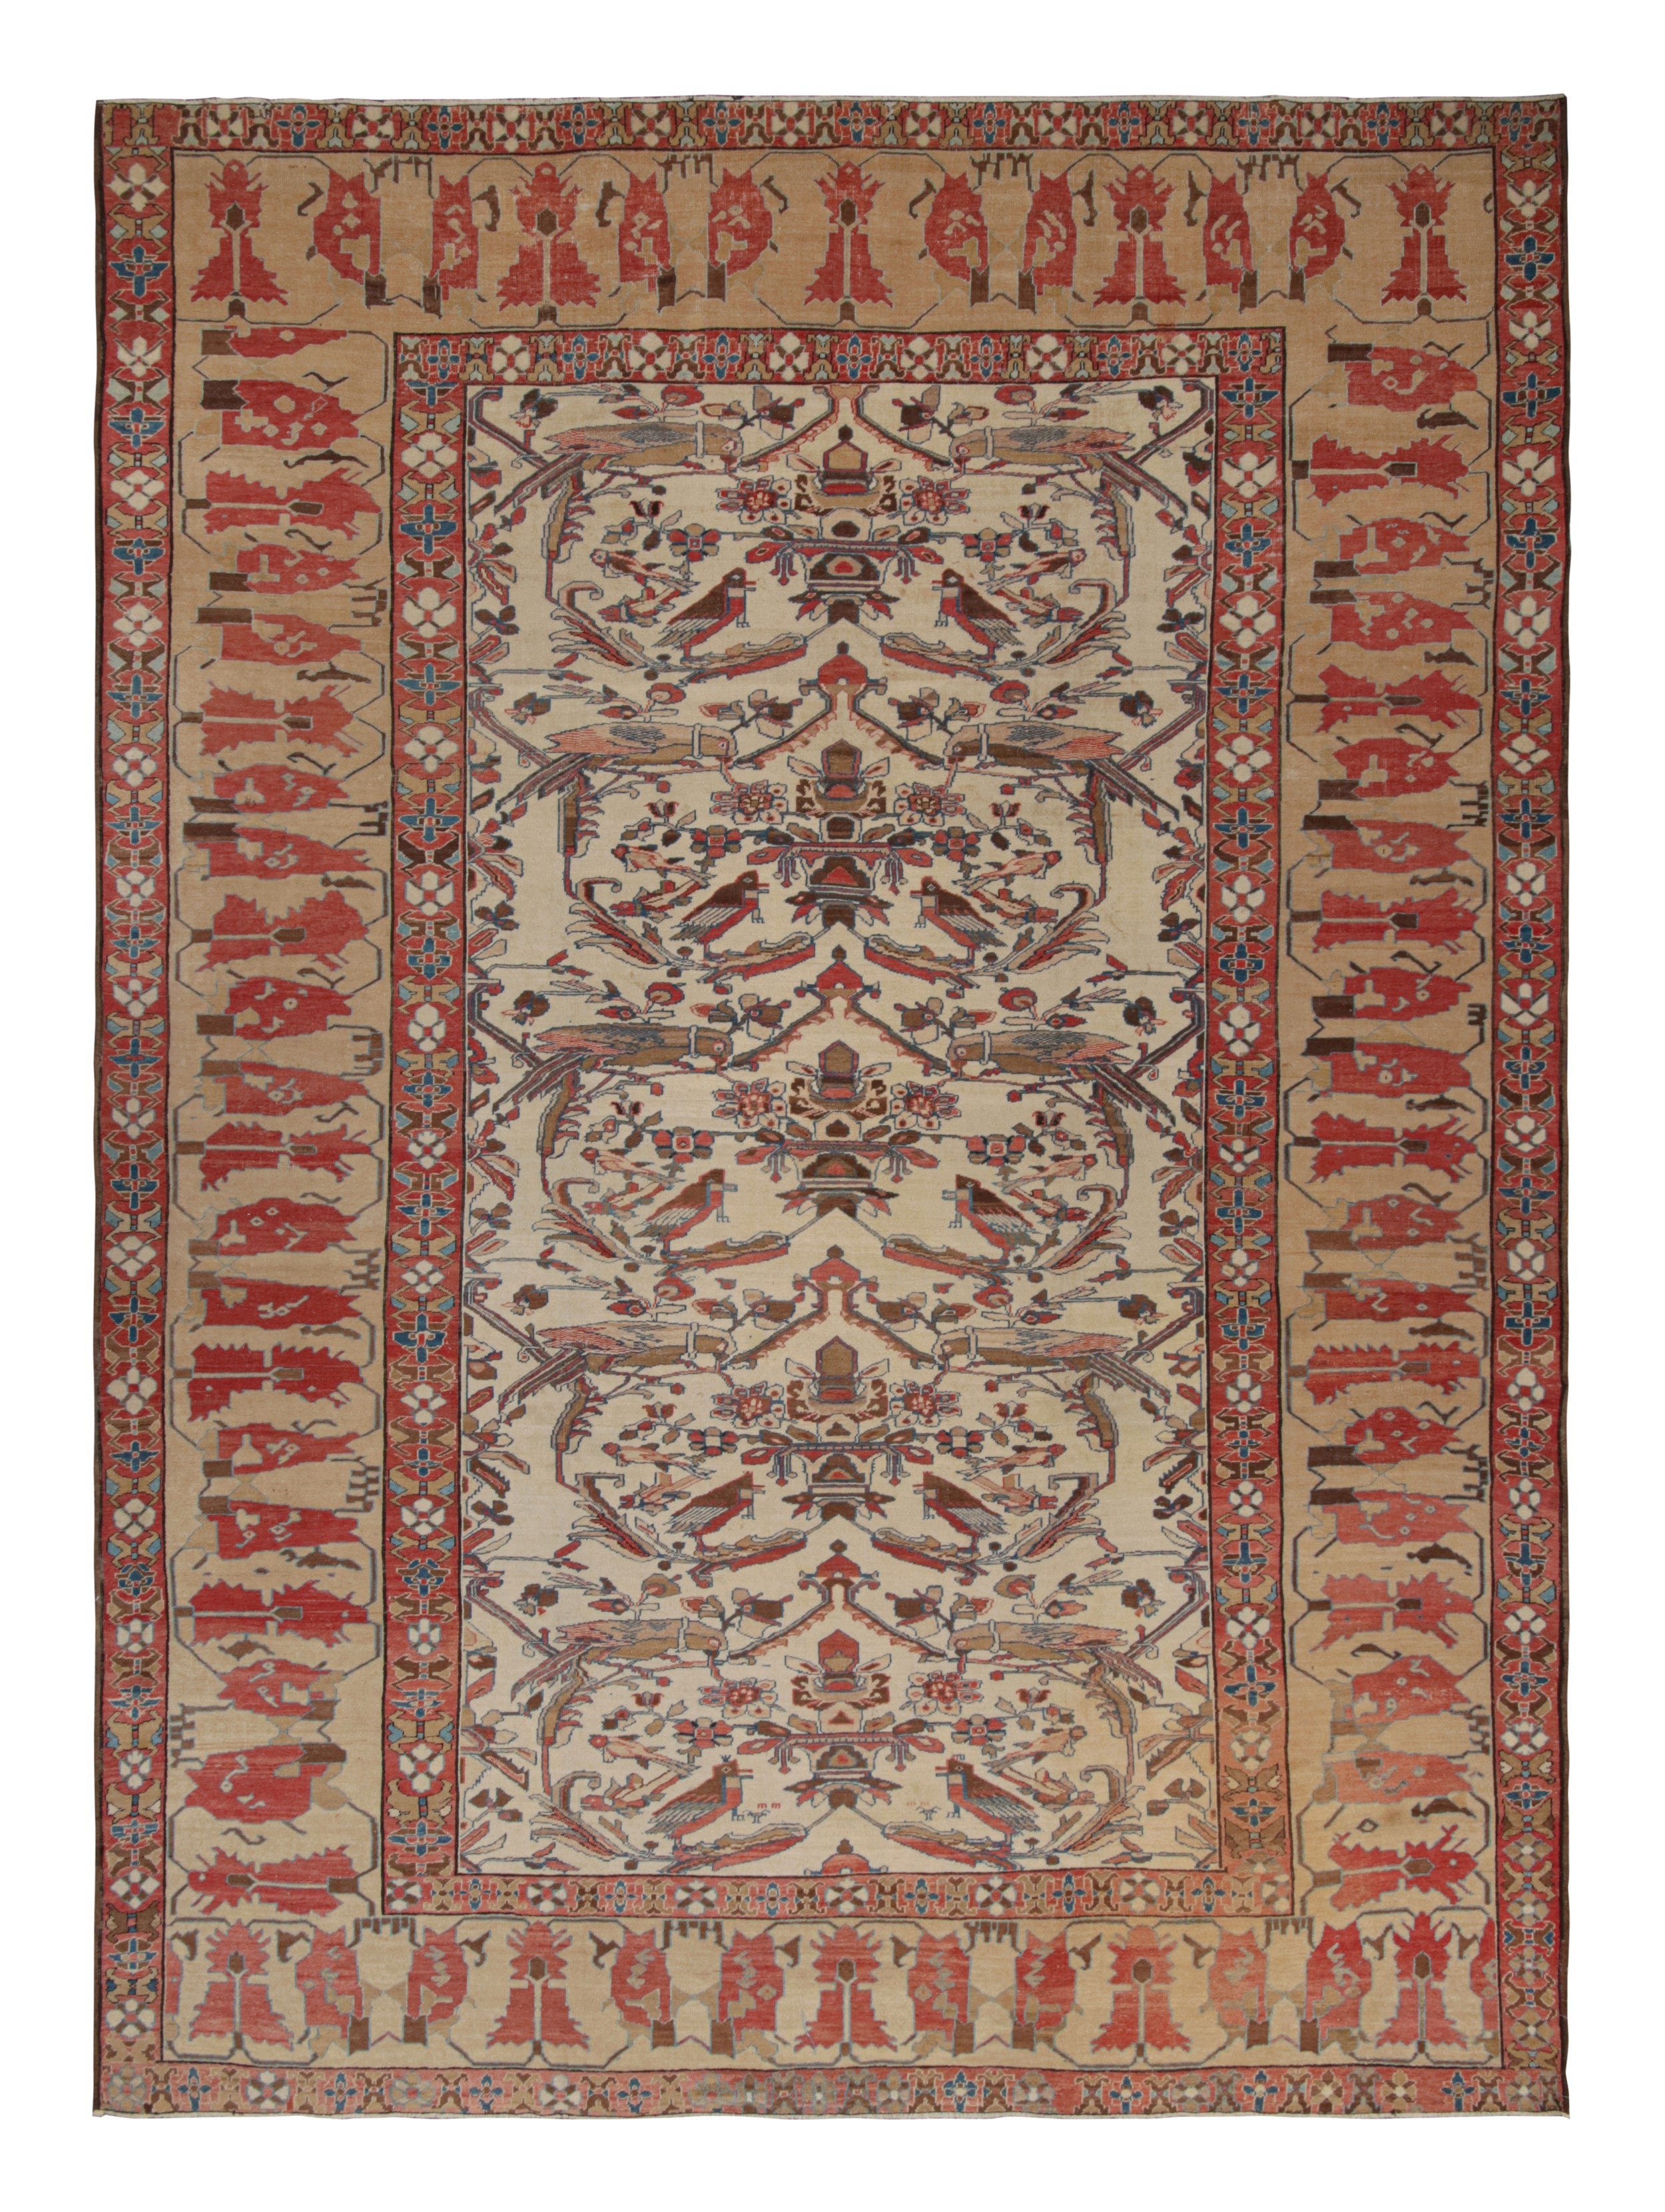 Oversized Antique Bakshaish Persian Rug with Pictorials